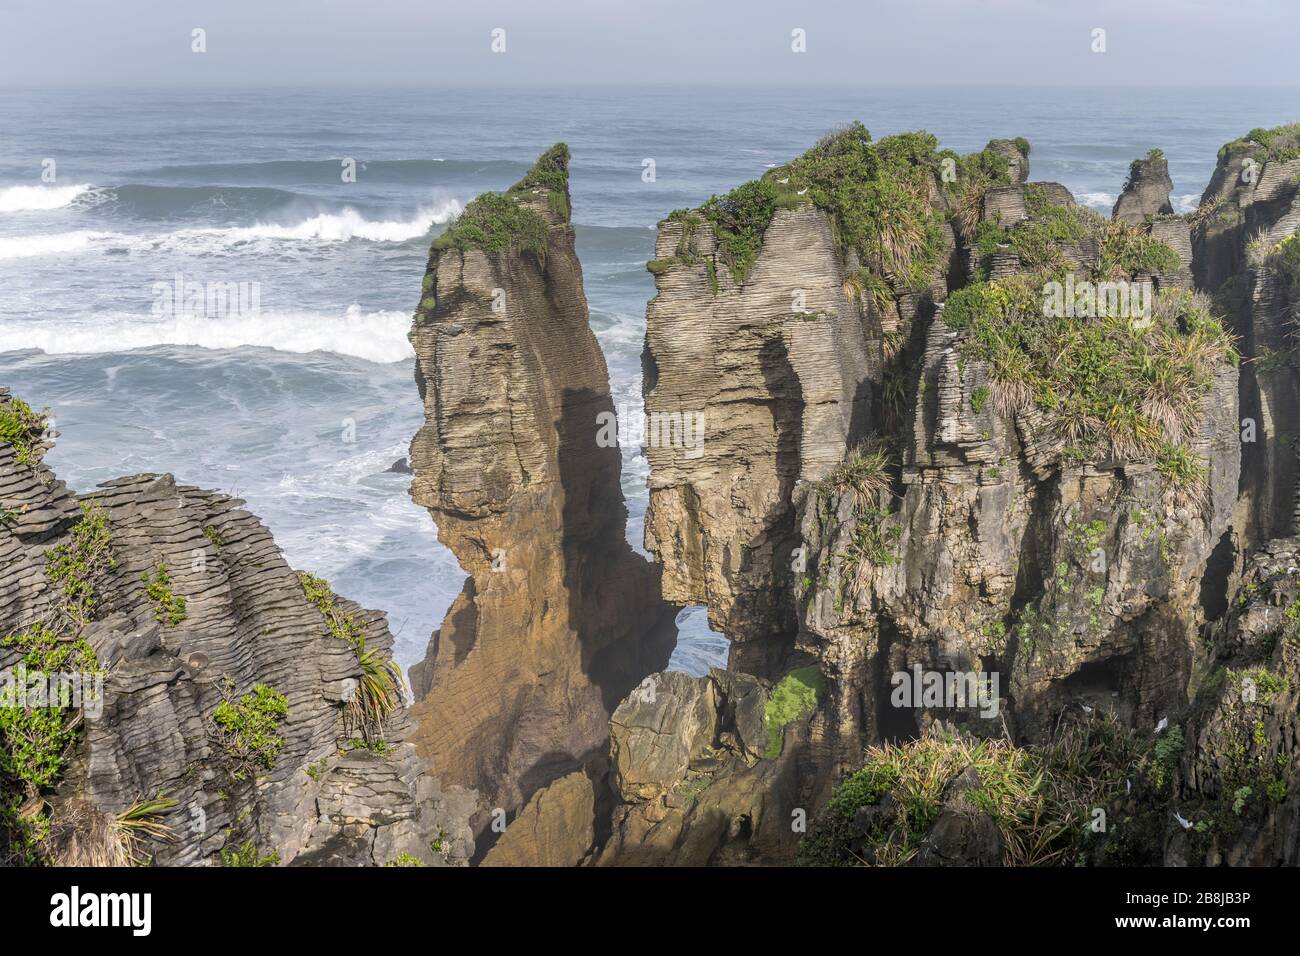 platy rocks of worn cliffs and Tasman sea waves at shore, shot in bright spring light at Punakaiki, West Coast, South Island, New Zealand Stock Photo